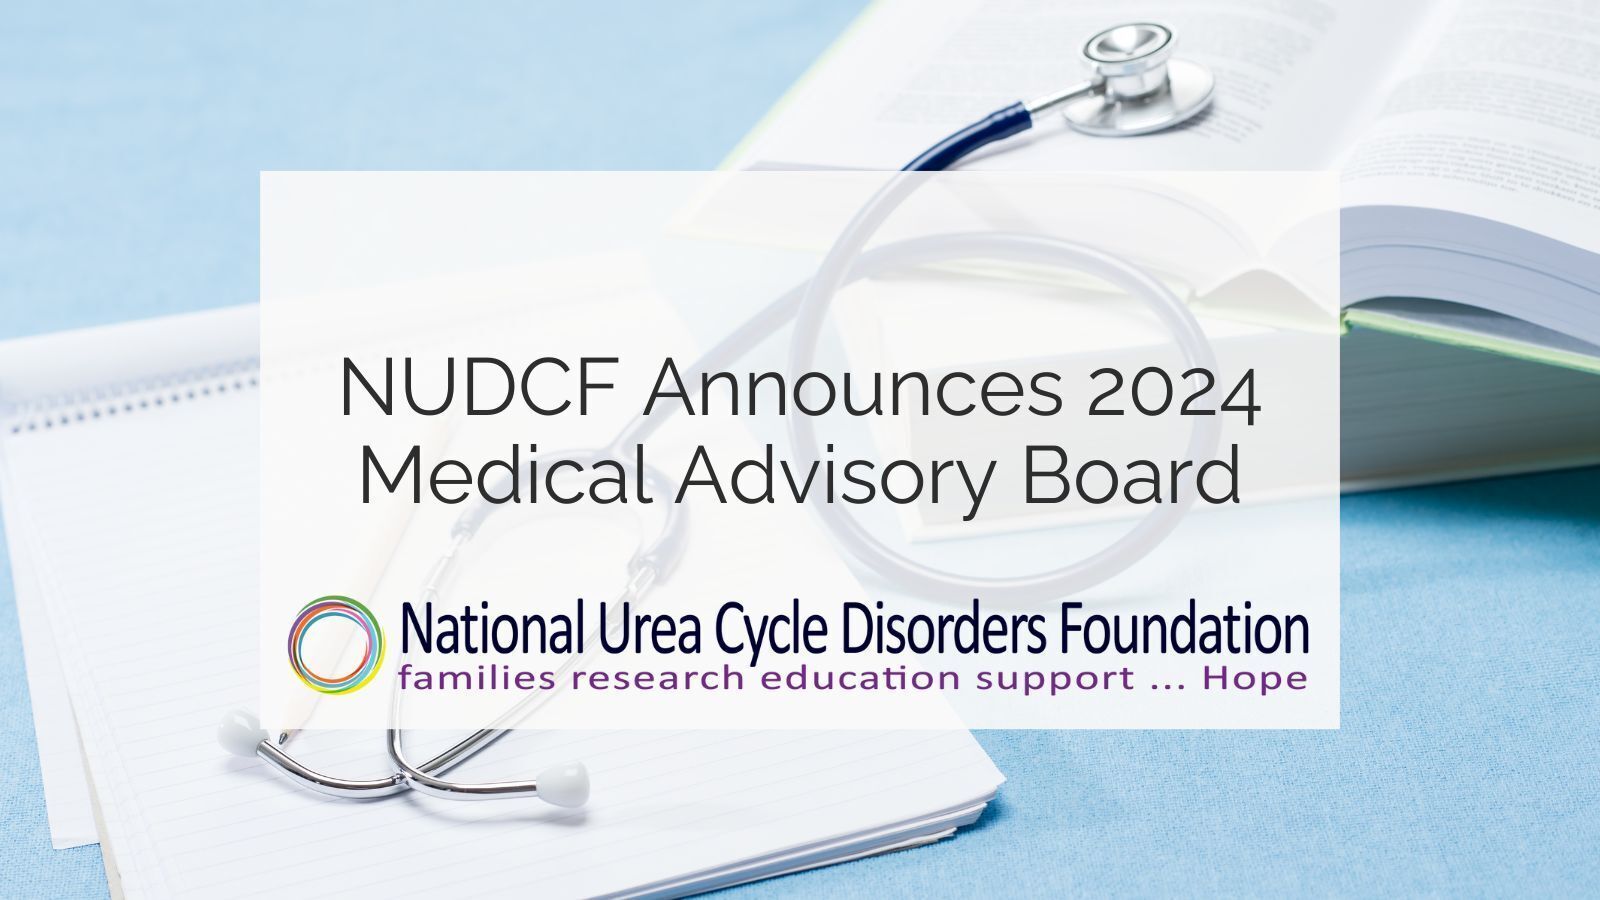 National Urea Cycle Disorders Foundation Announces 2024 Medical Advisory Board